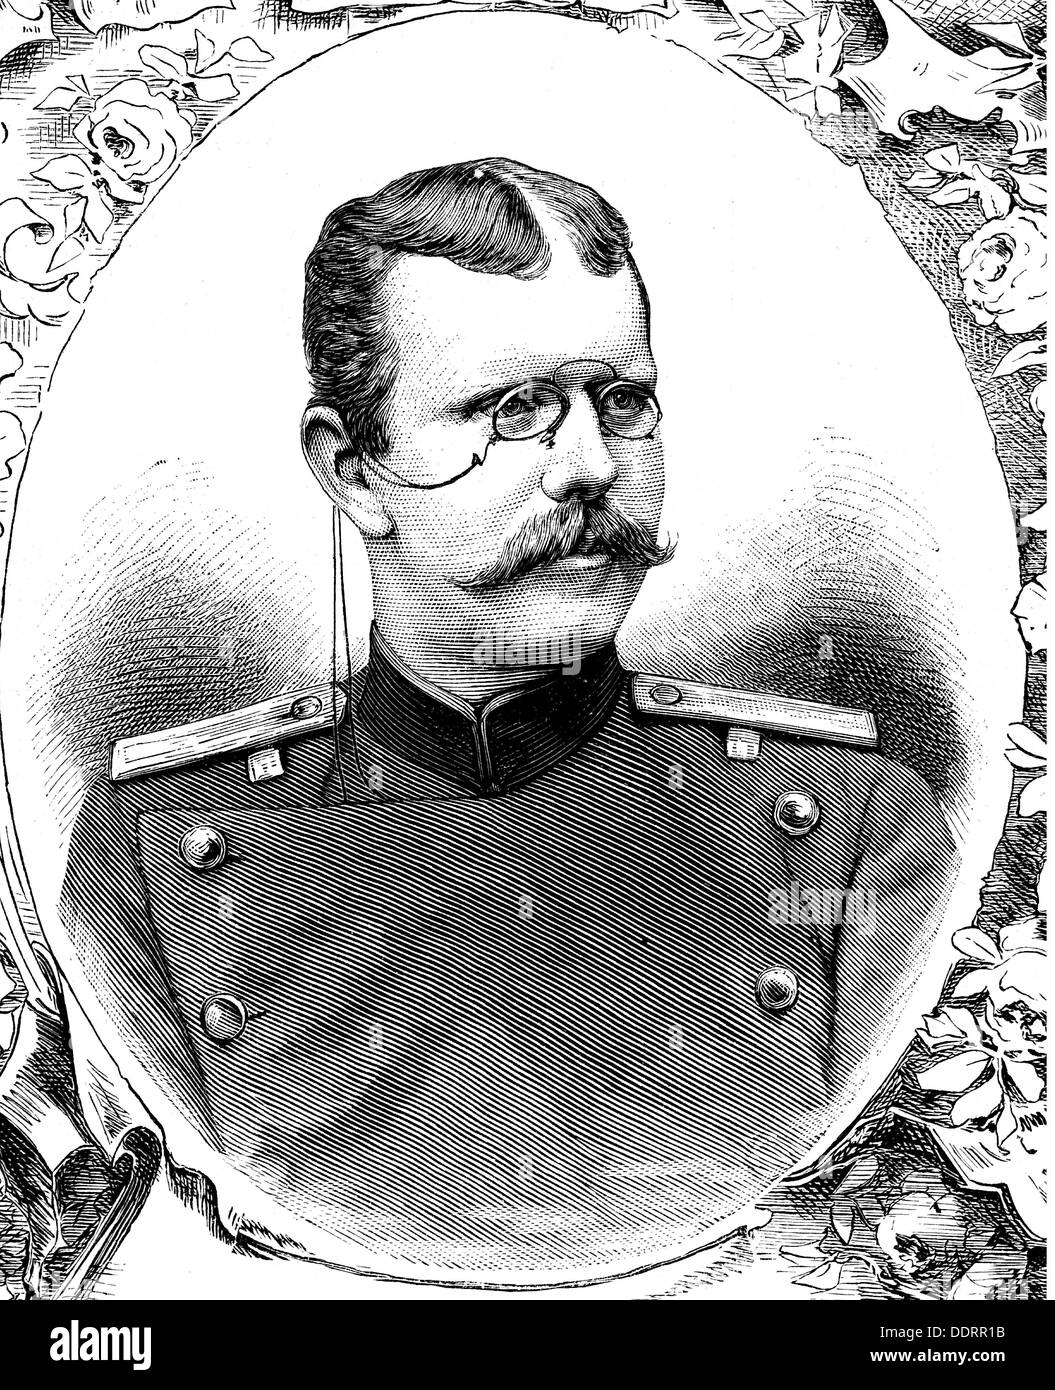 William, 21.12.1853 - 15.12.1924, Prince of Saxe-Weimar-Eisenach, portrait, wood engraving, 1885, Stock Photo